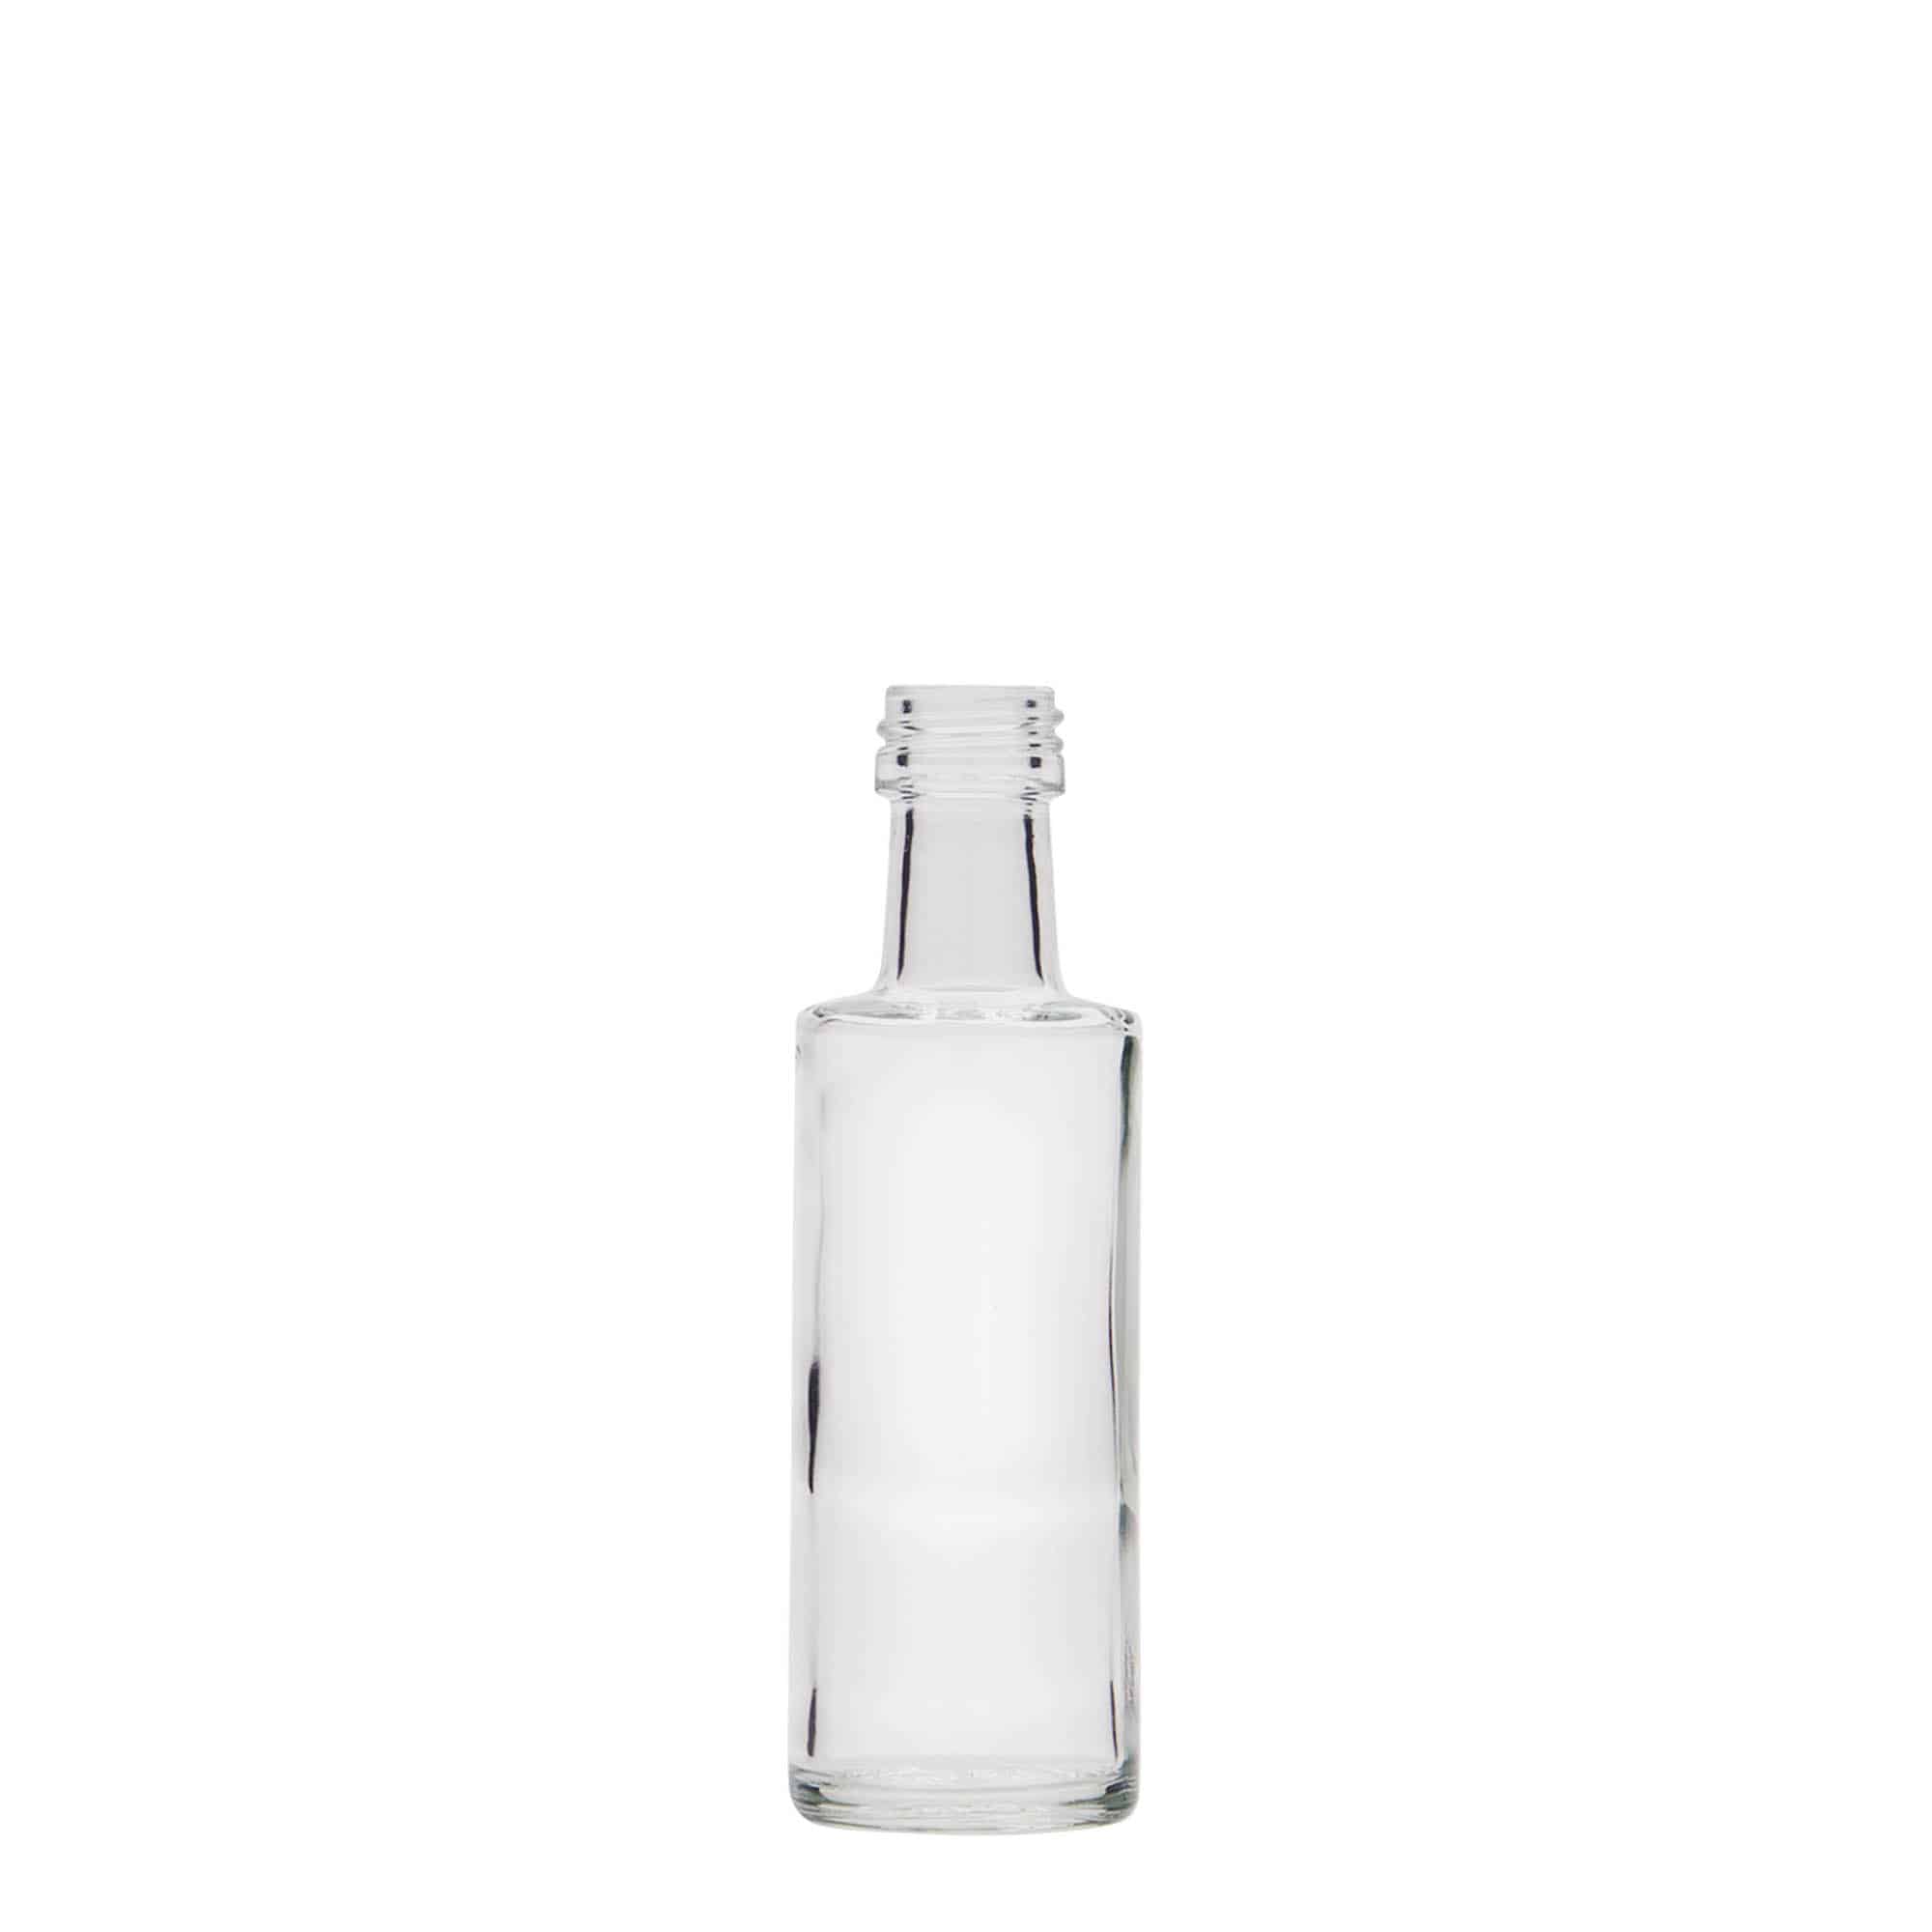 40 ml glass bottle 'Dorica', closure: PP 18